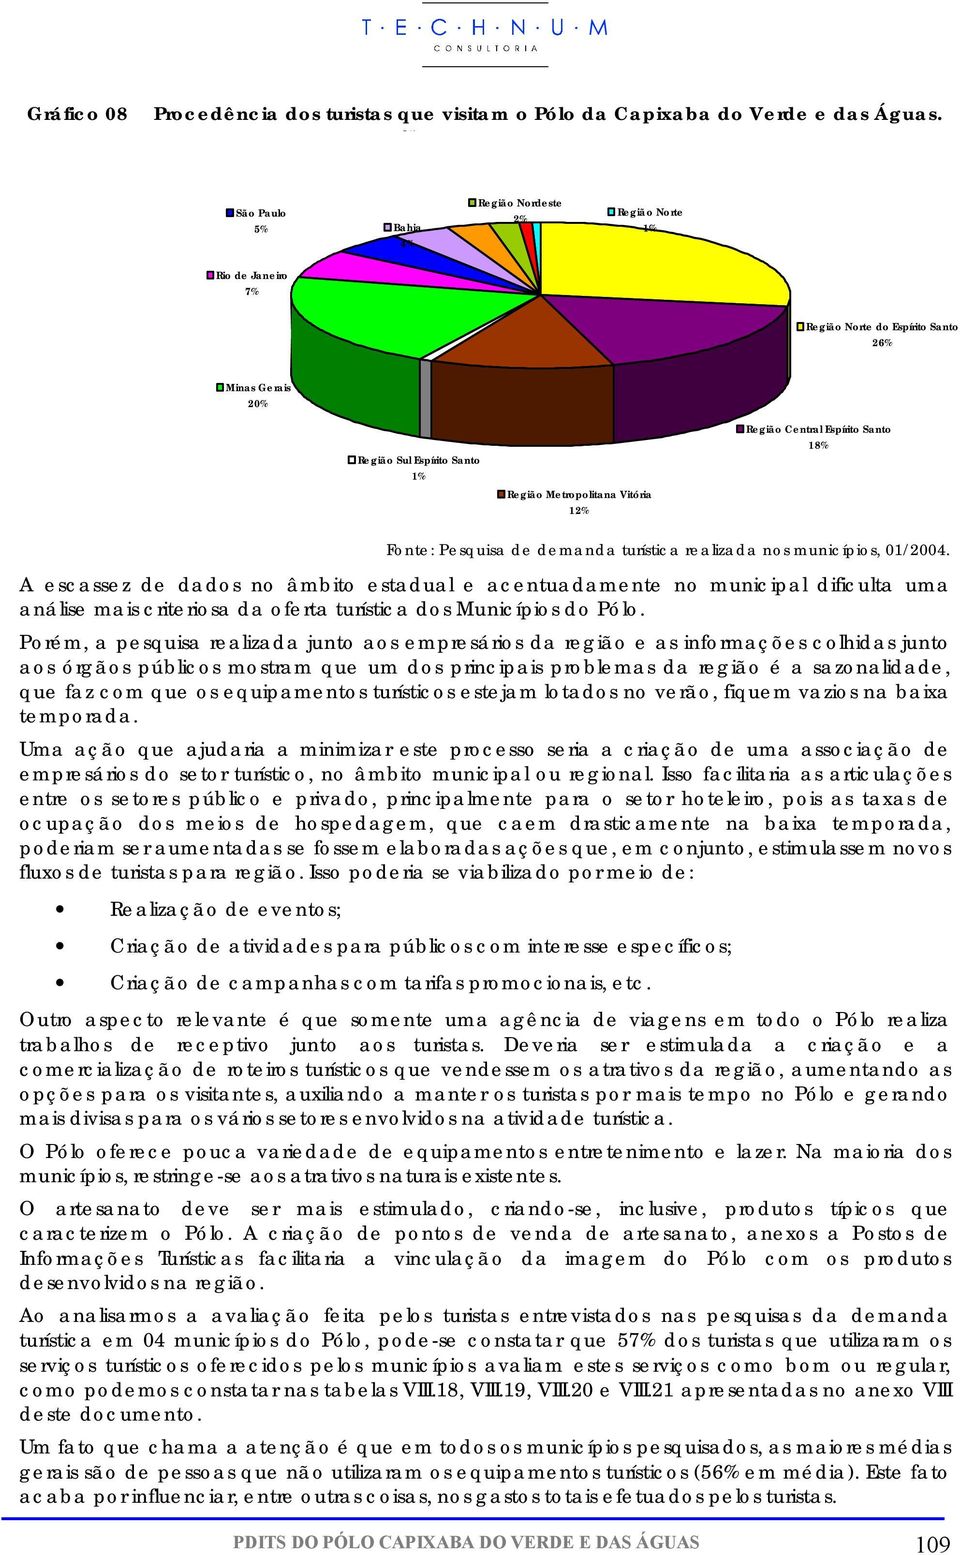 Espírito Santo 18% Fonte: Pesquisa de demanda turística realizada nos municípios, 01/2004.